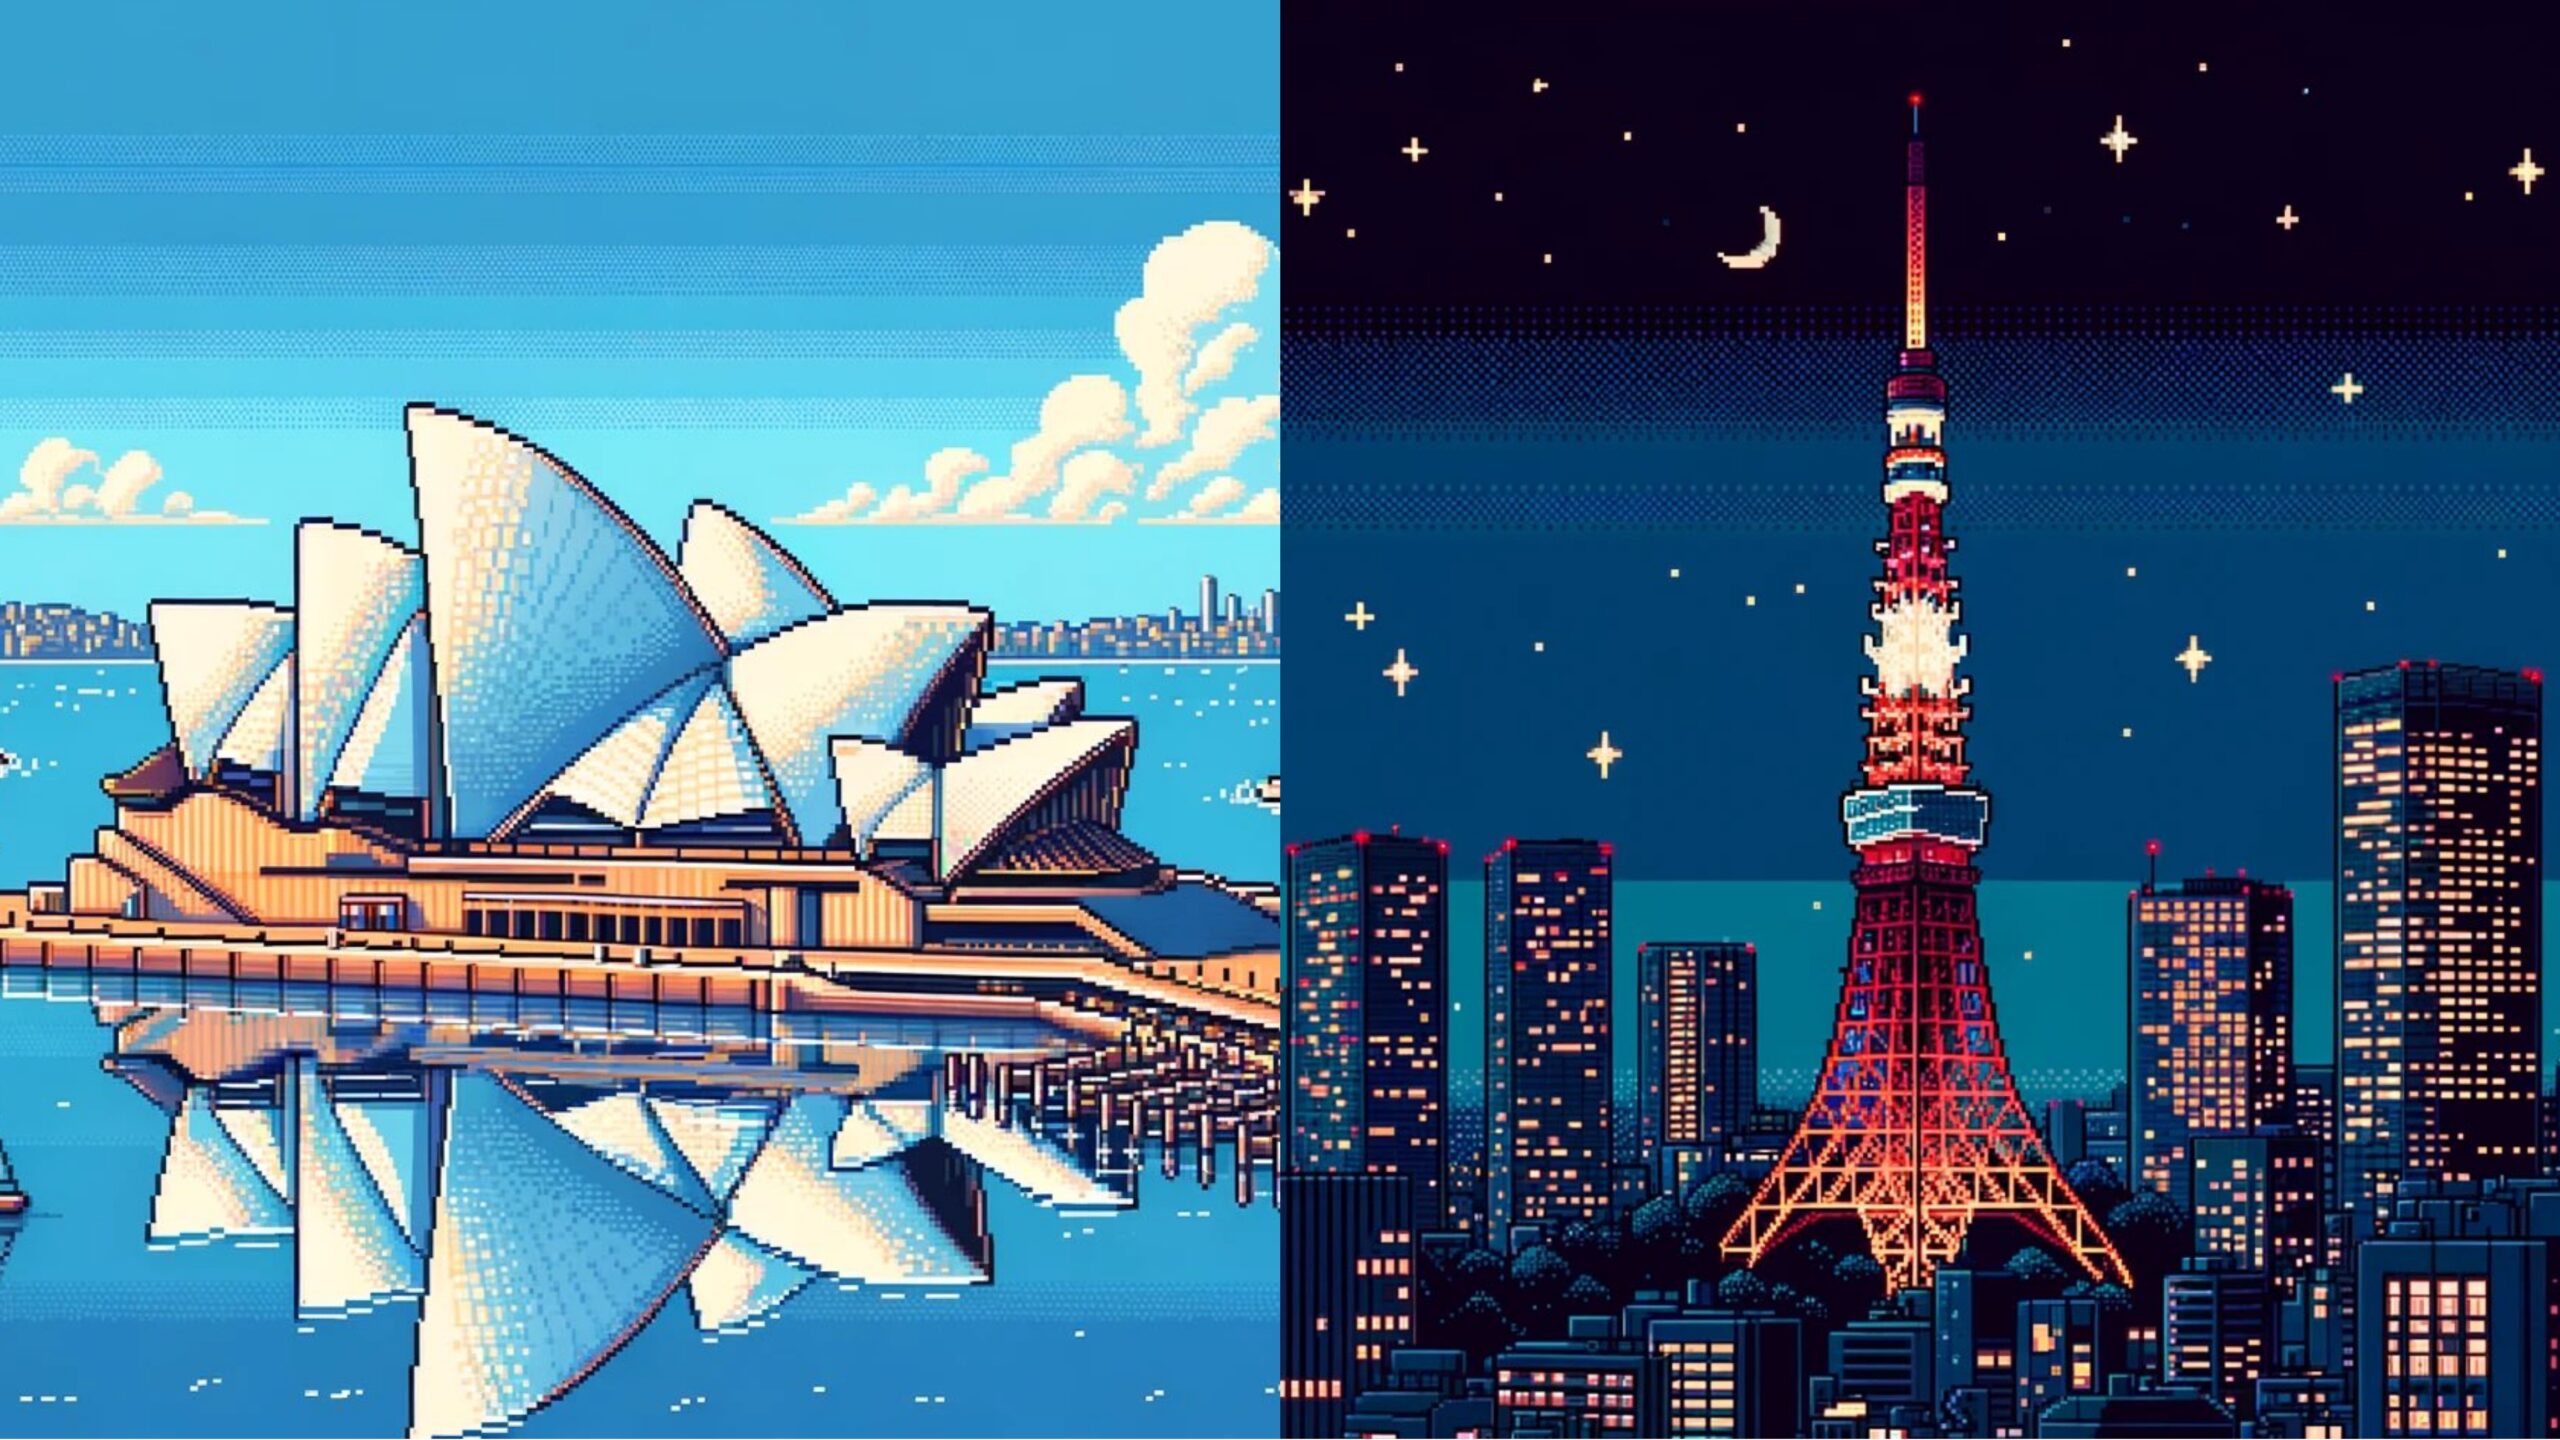 AI Reimagines Famous Landmarks in 8-Bit Pixel Art